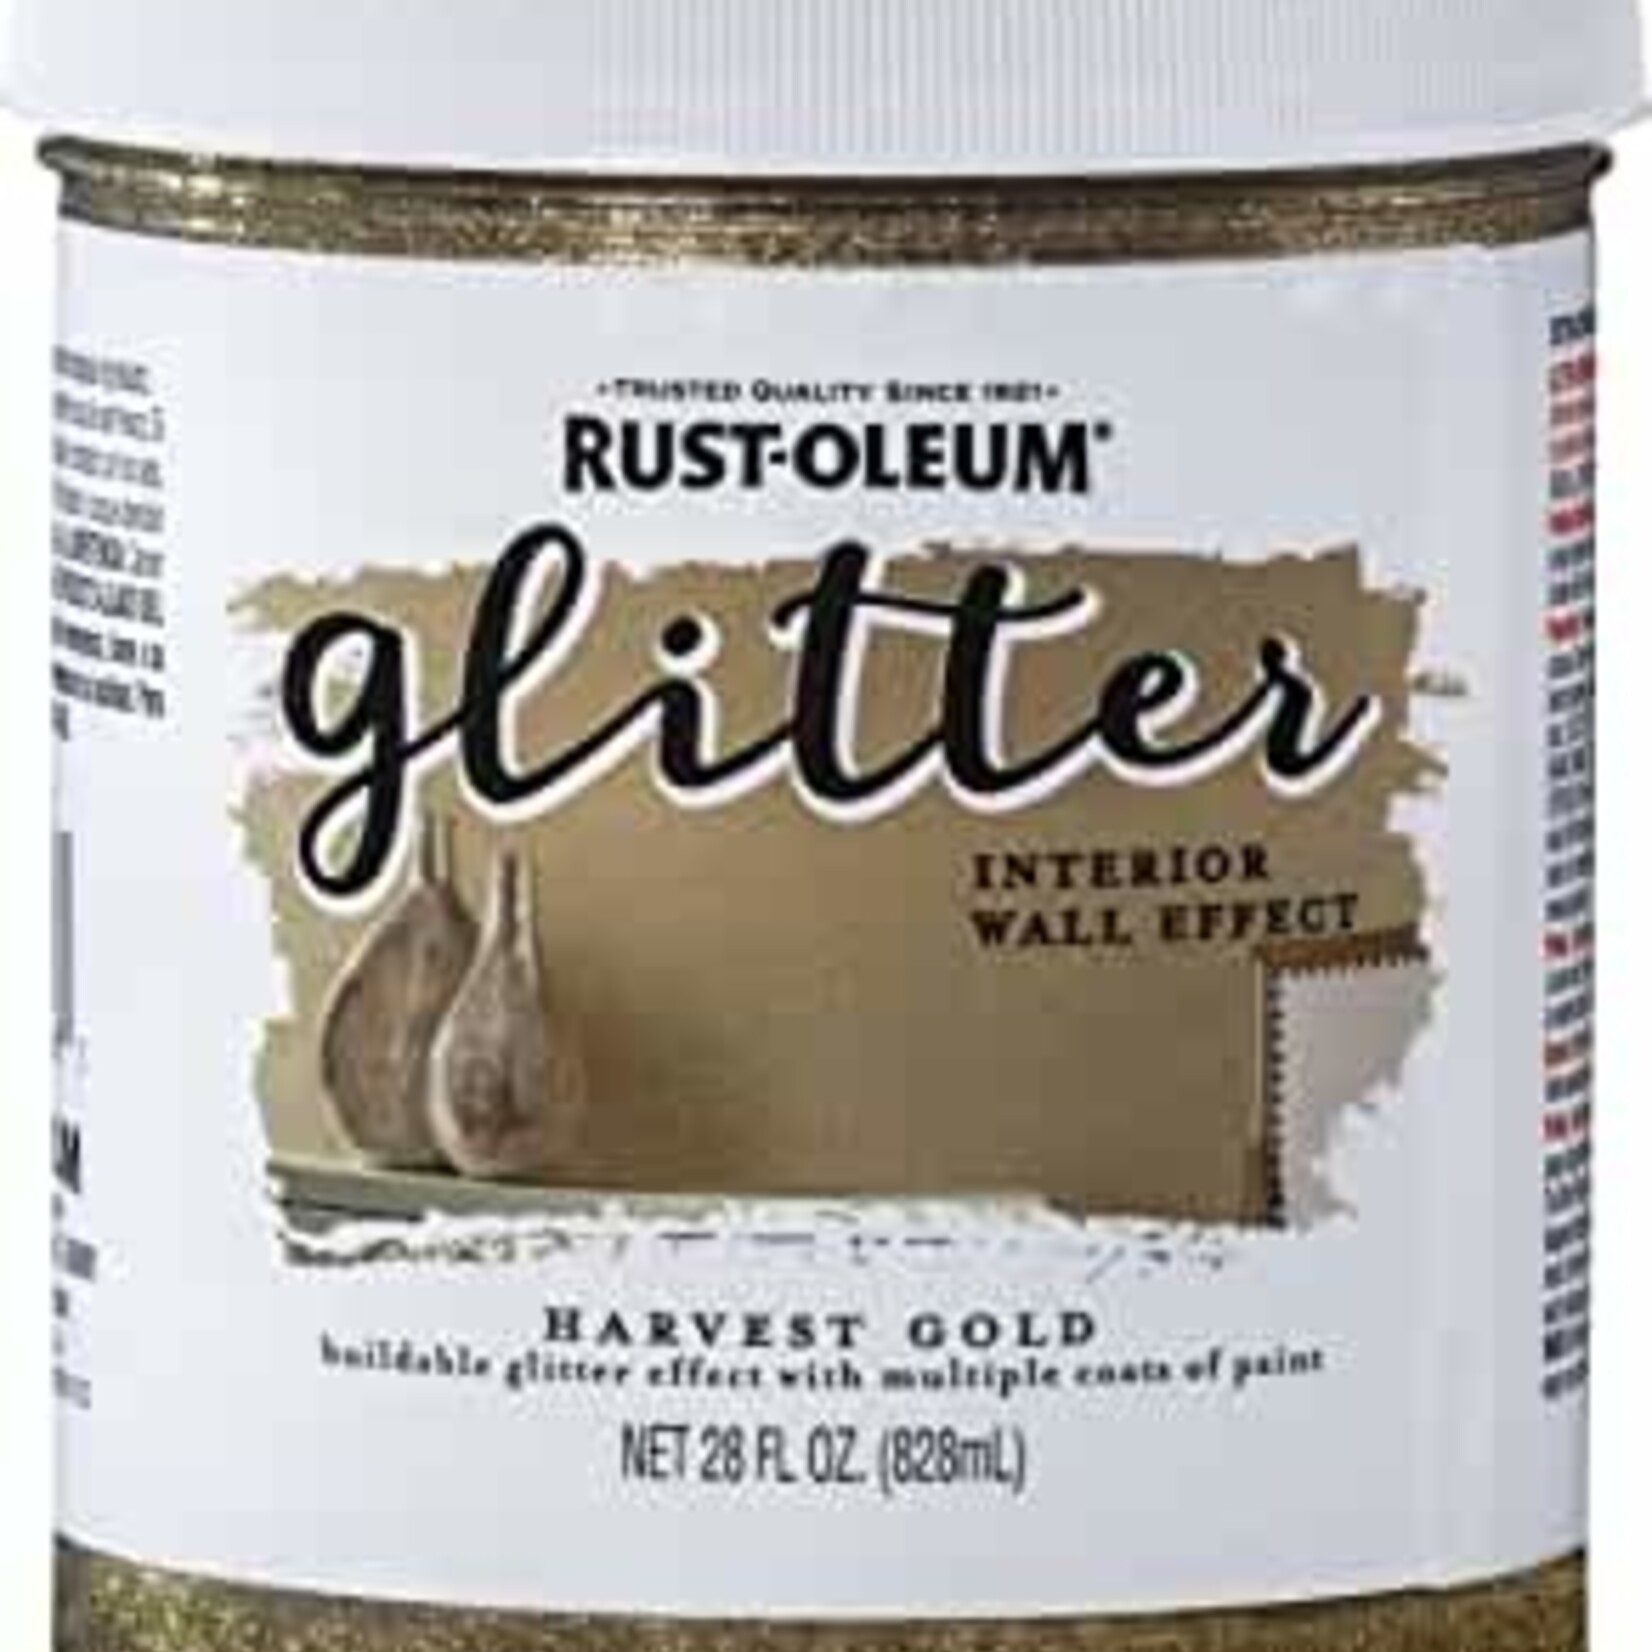 Rustoleum Glitter Interior Wall Paint Harvest Gold 828ml